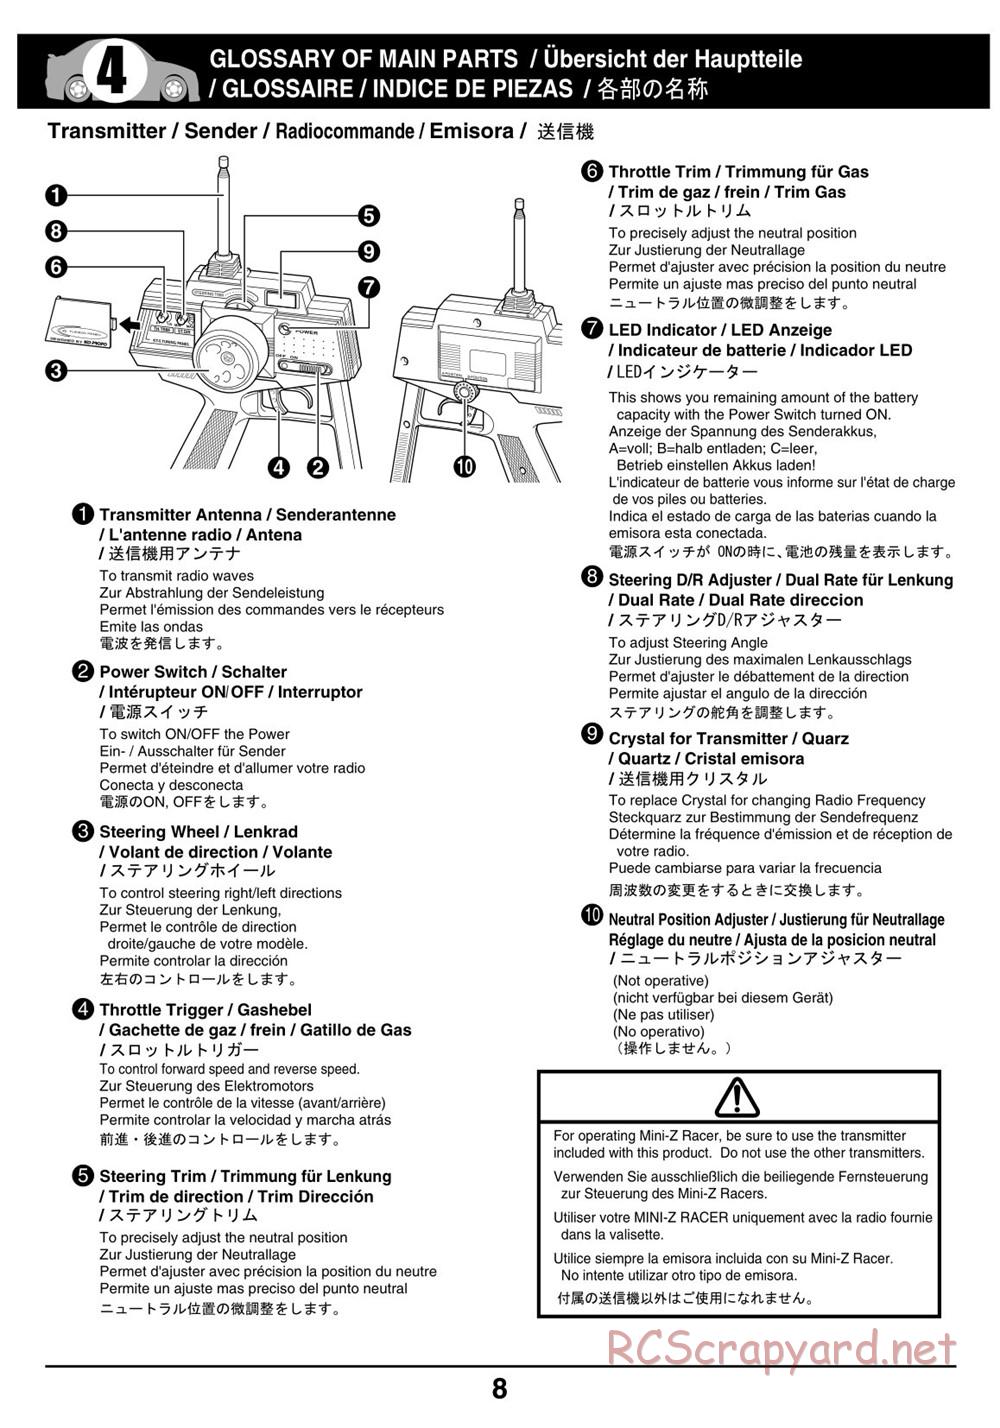 Kyosho - Mini-Z Racer MR02 - Manual - Page 8